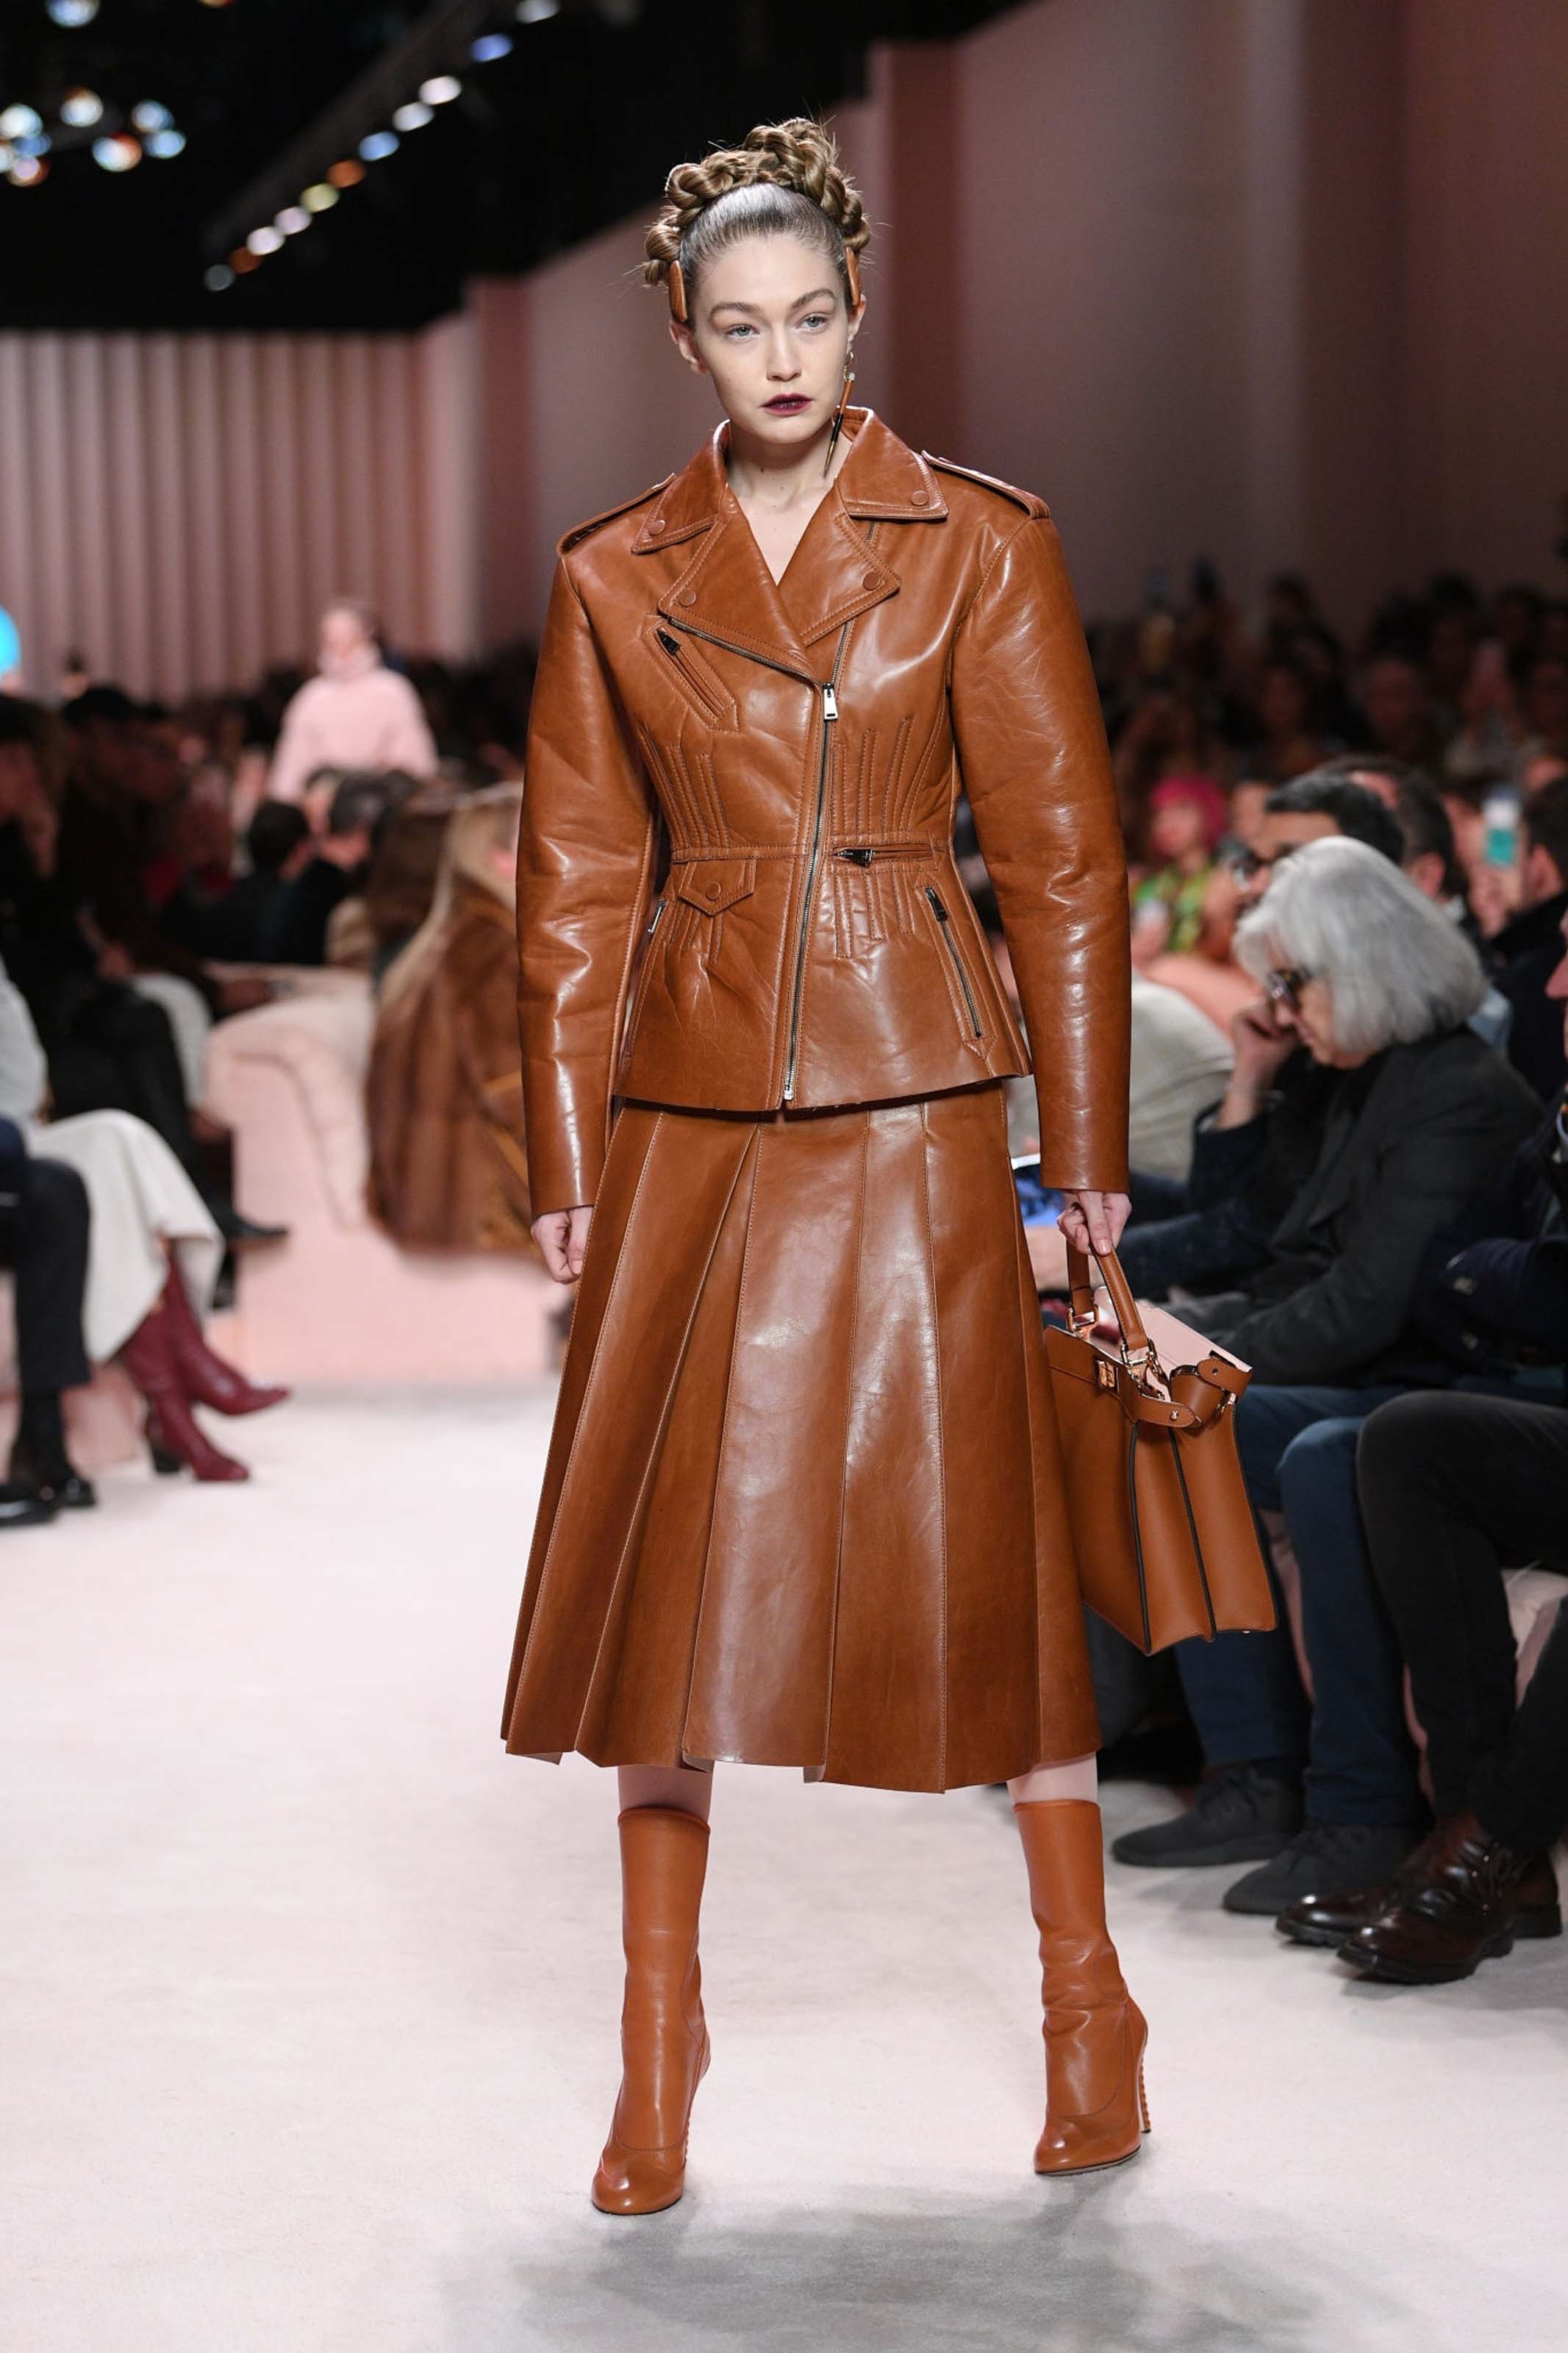 Gigi Hadid walks the runway at Fendi fashion show